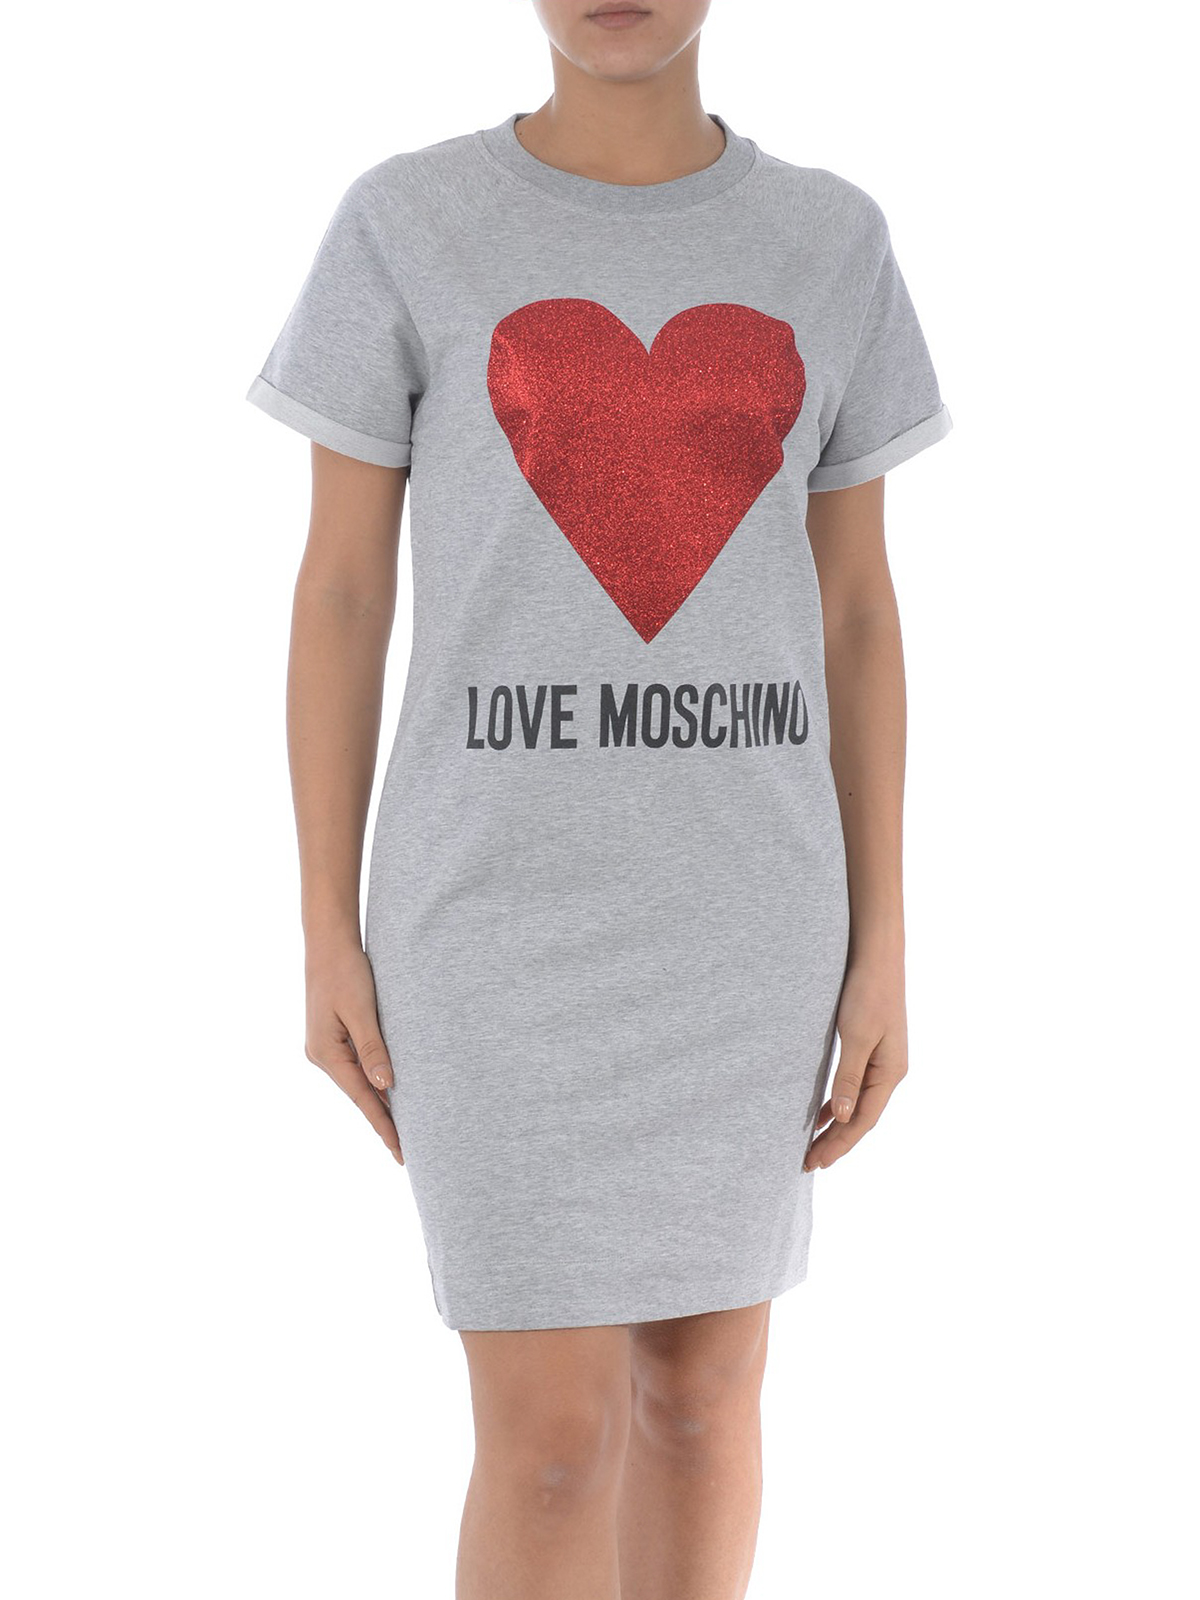 love moschino dresses